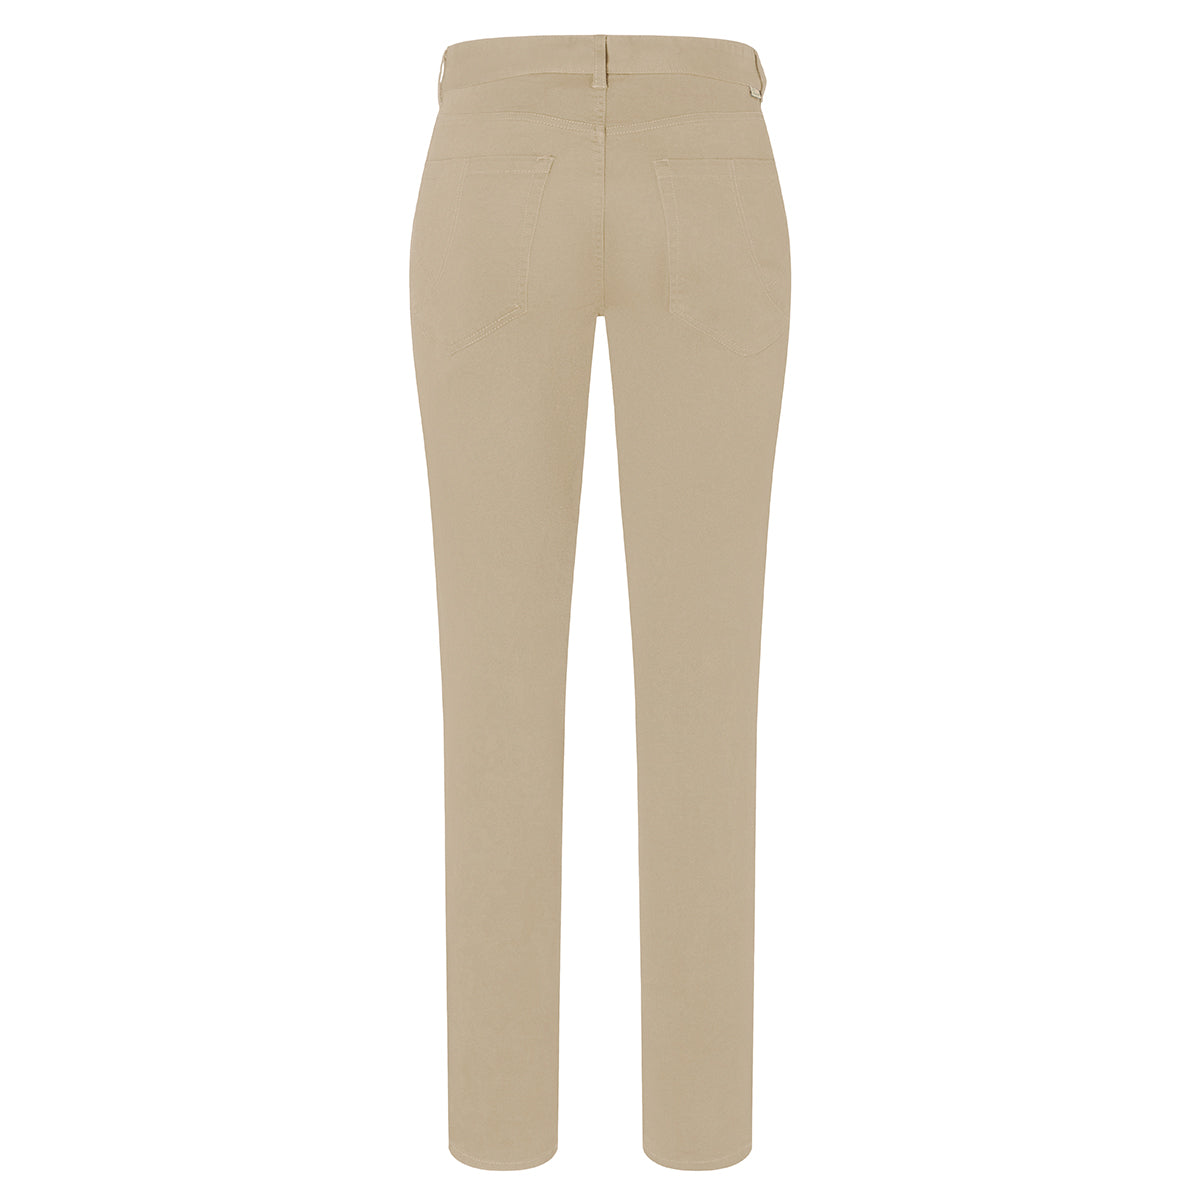 Karlowsky - 5-lomme bukser til damer - Pebble grey - Størrelse: 46